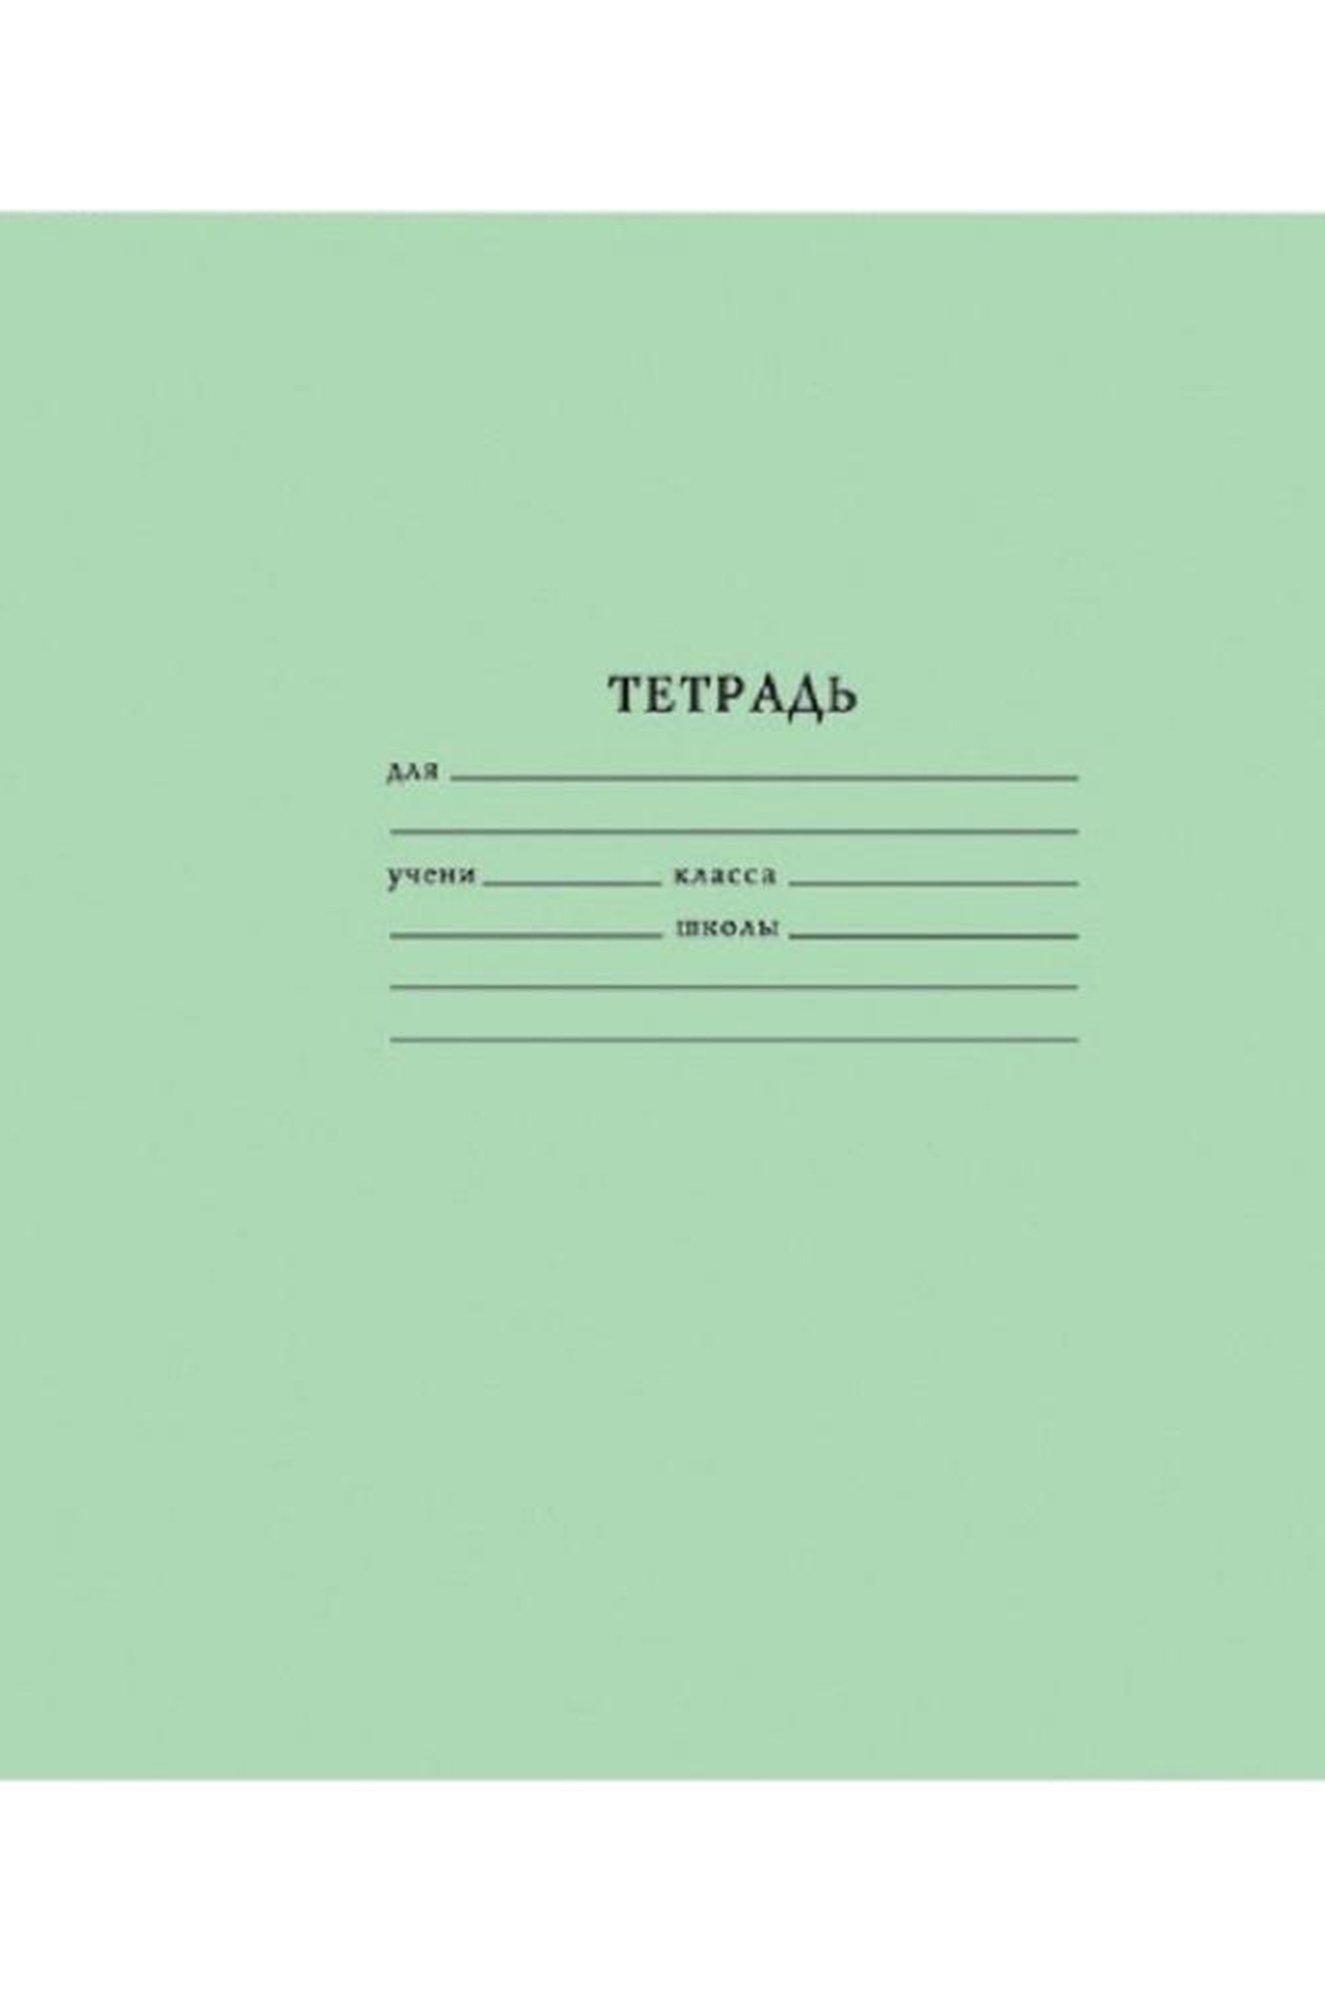 Набор тетрадей в узкую линию 12 л. 10 шт. Тетрапром